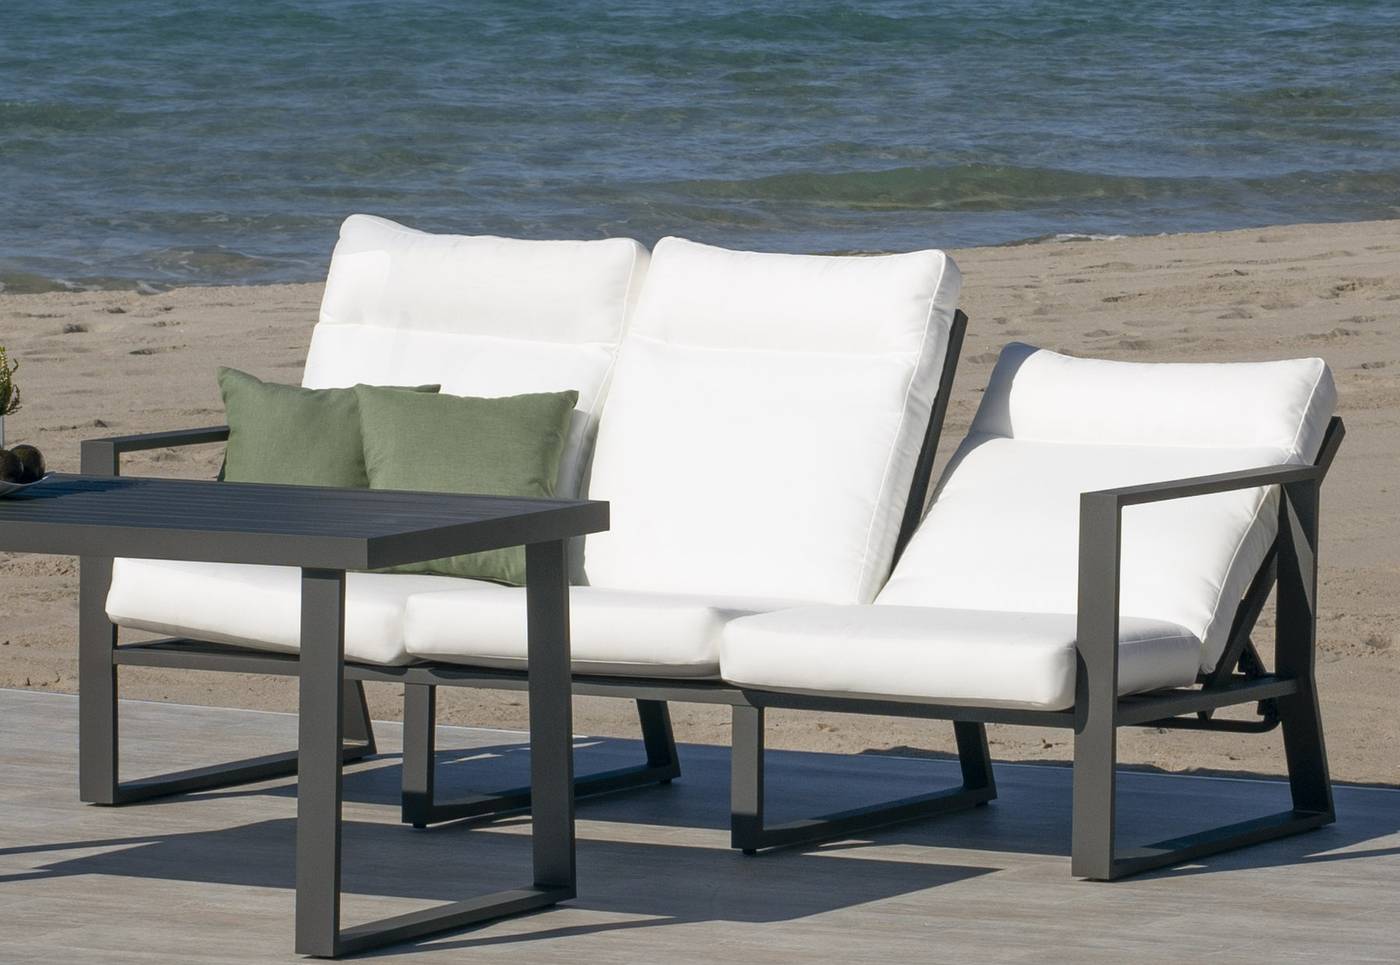 Set Aluminio Bolonia-750 - Conjunto aluminio: sofá 3 plazas + 2 sillones + mesa de comedor + 2 taburetes. Respaldos reclinables. Colores: blanco, antracita, champagne, plata o marrón.